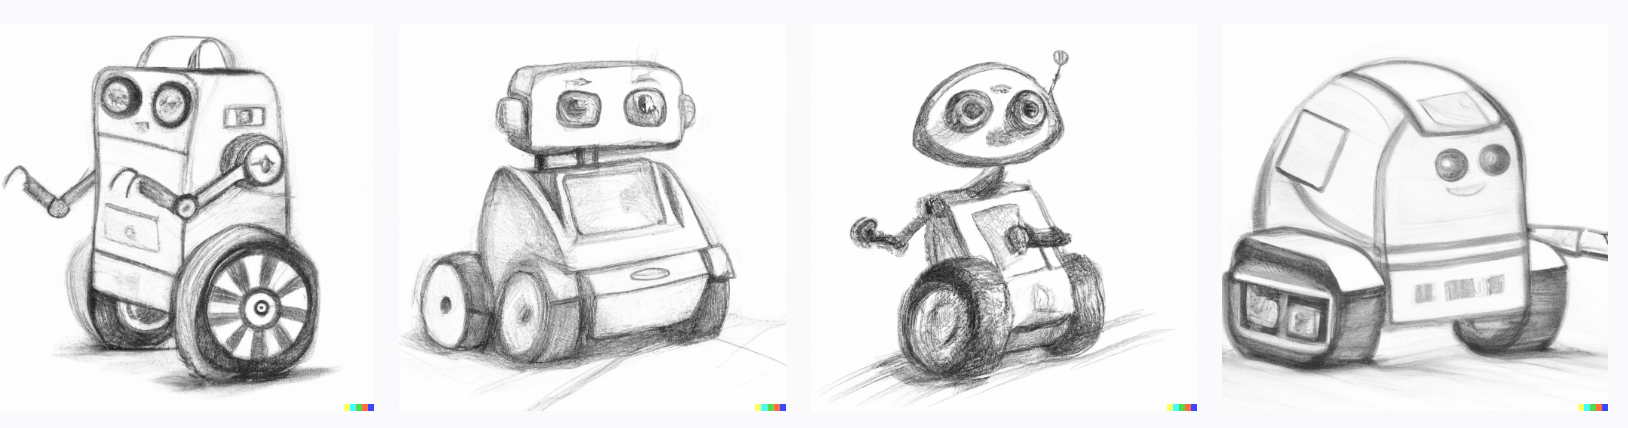 Wheeled self-driving robot cute sketch pensil design 